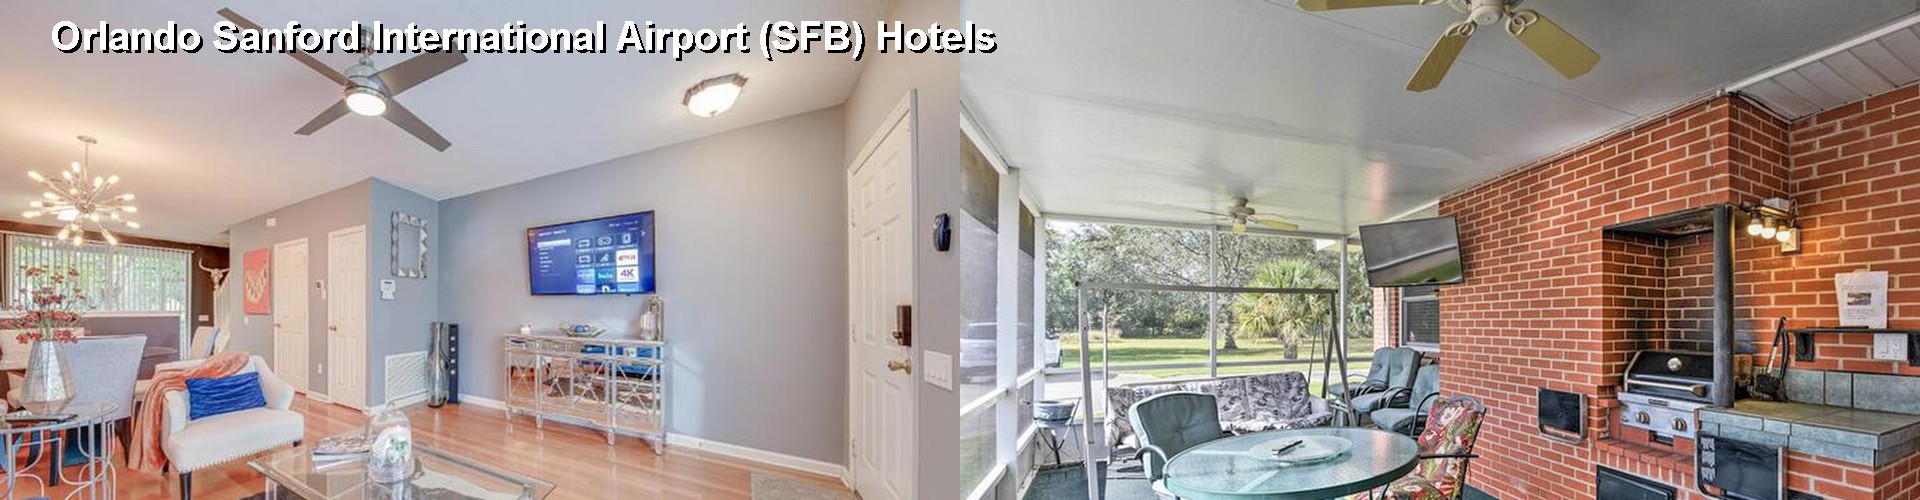 4 Best Hotels near Orlando Sanford International Airport (SFB)